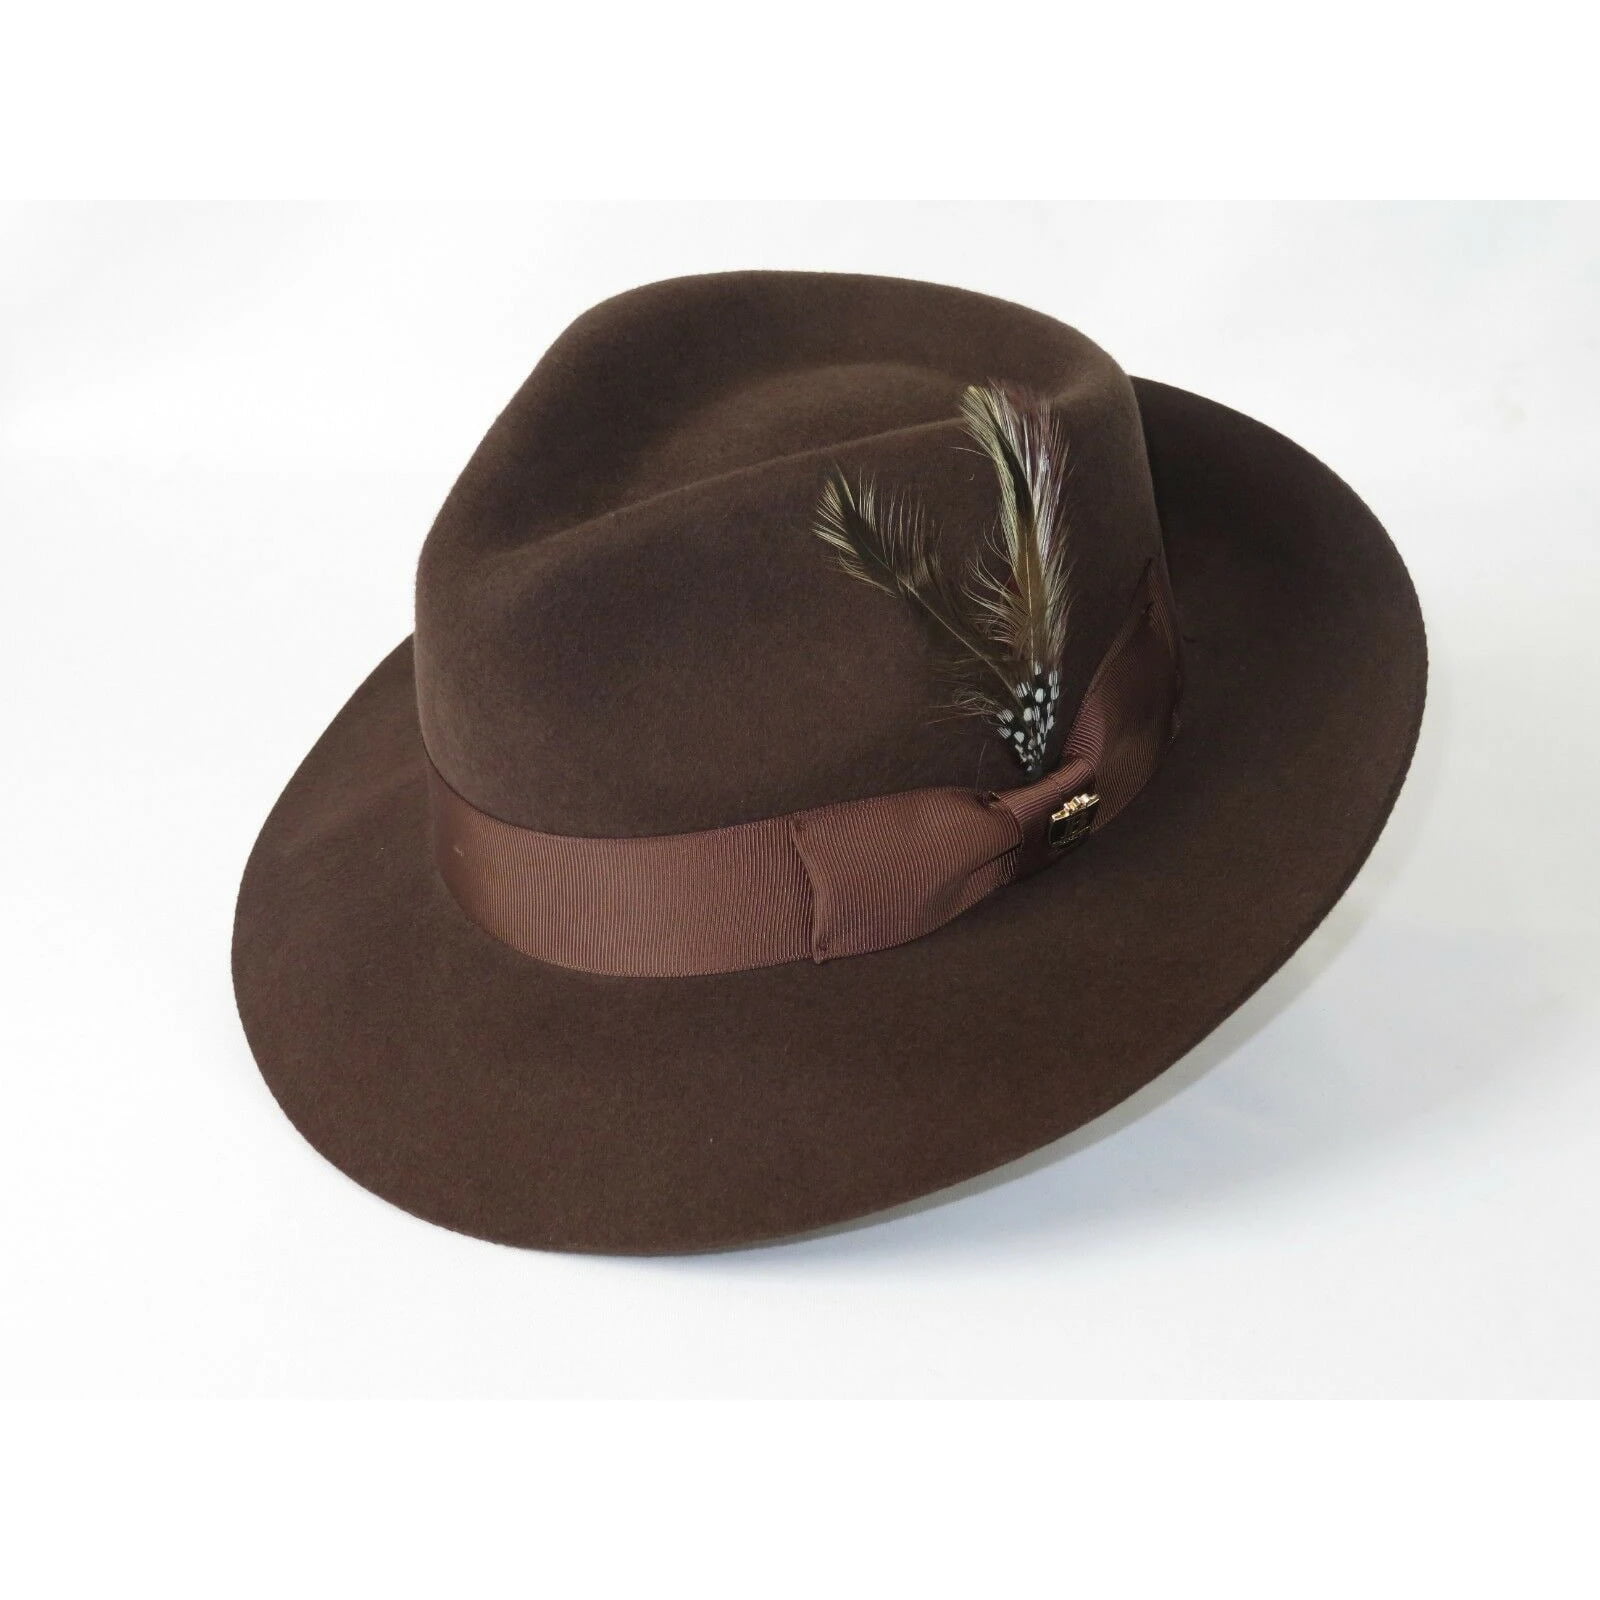 New Bruno Capelo 100% Australian Wool Derby Dress Hat Black,Brown,Burgundy,Navy